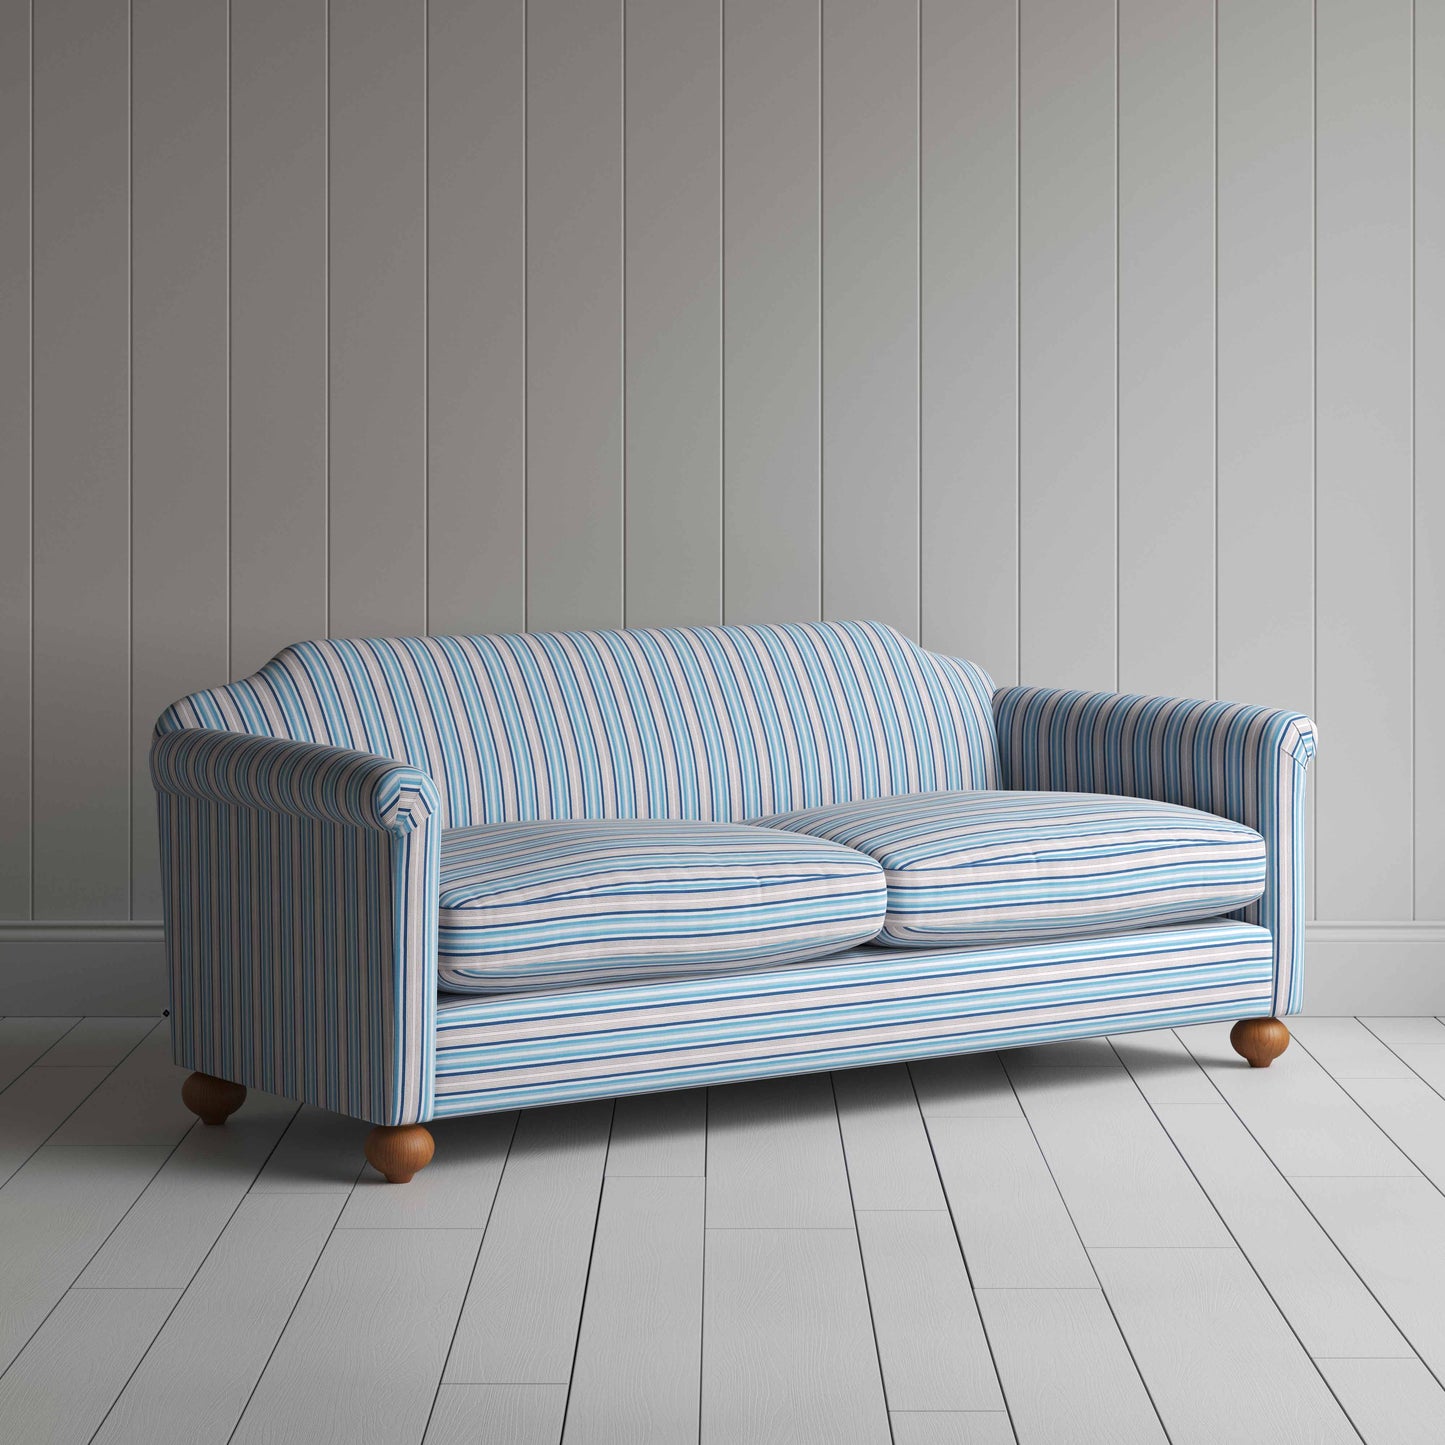 Dolittle 4 Seater Sofa in Slow Lane Cotton Linen, Blue